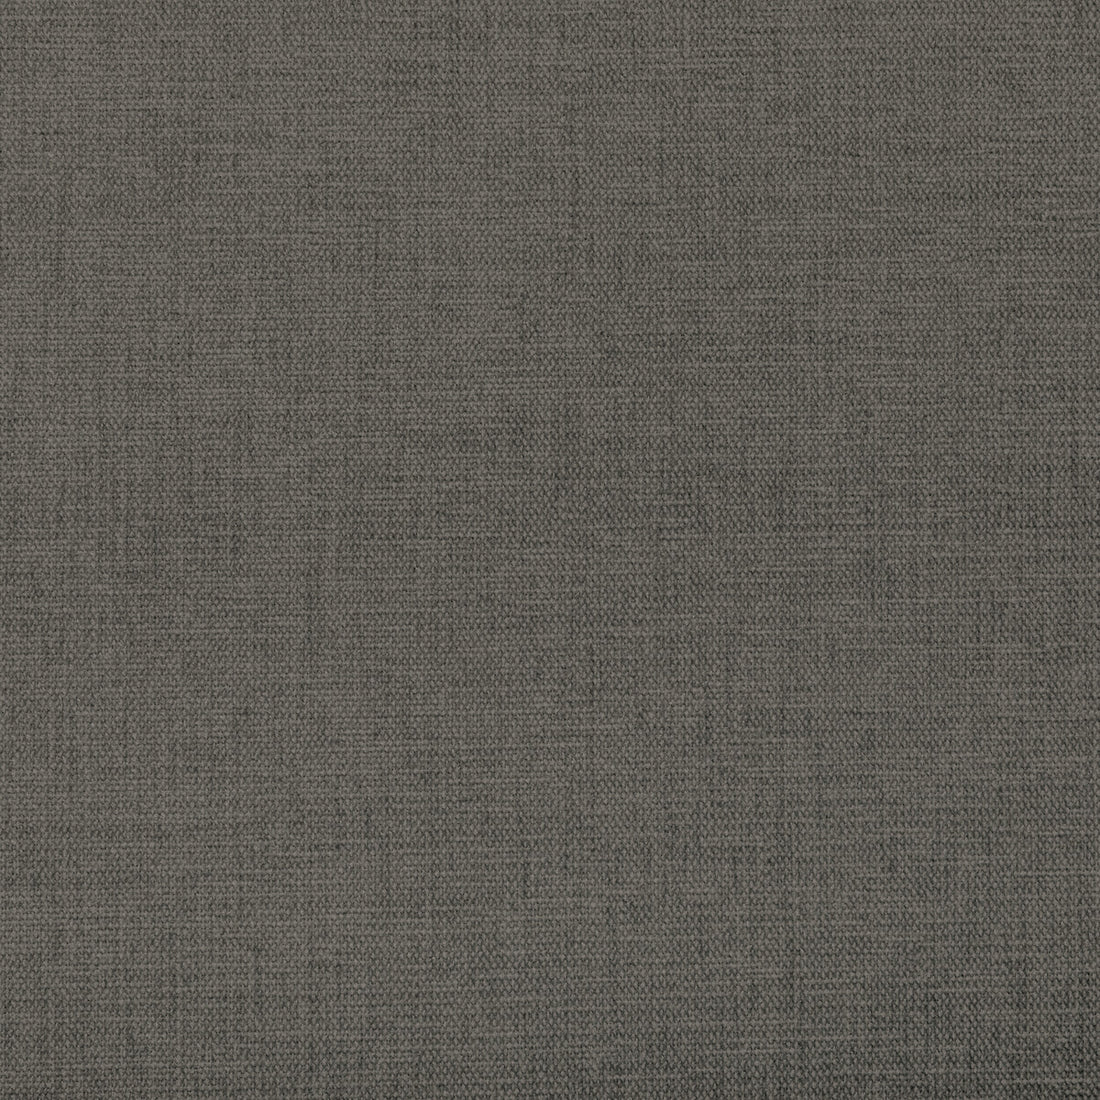 Kravet Smart fabric in 34959-1152 color - pattern 34959.1152.0 - by Kravet Smart in the Performance Kravetarmor collection